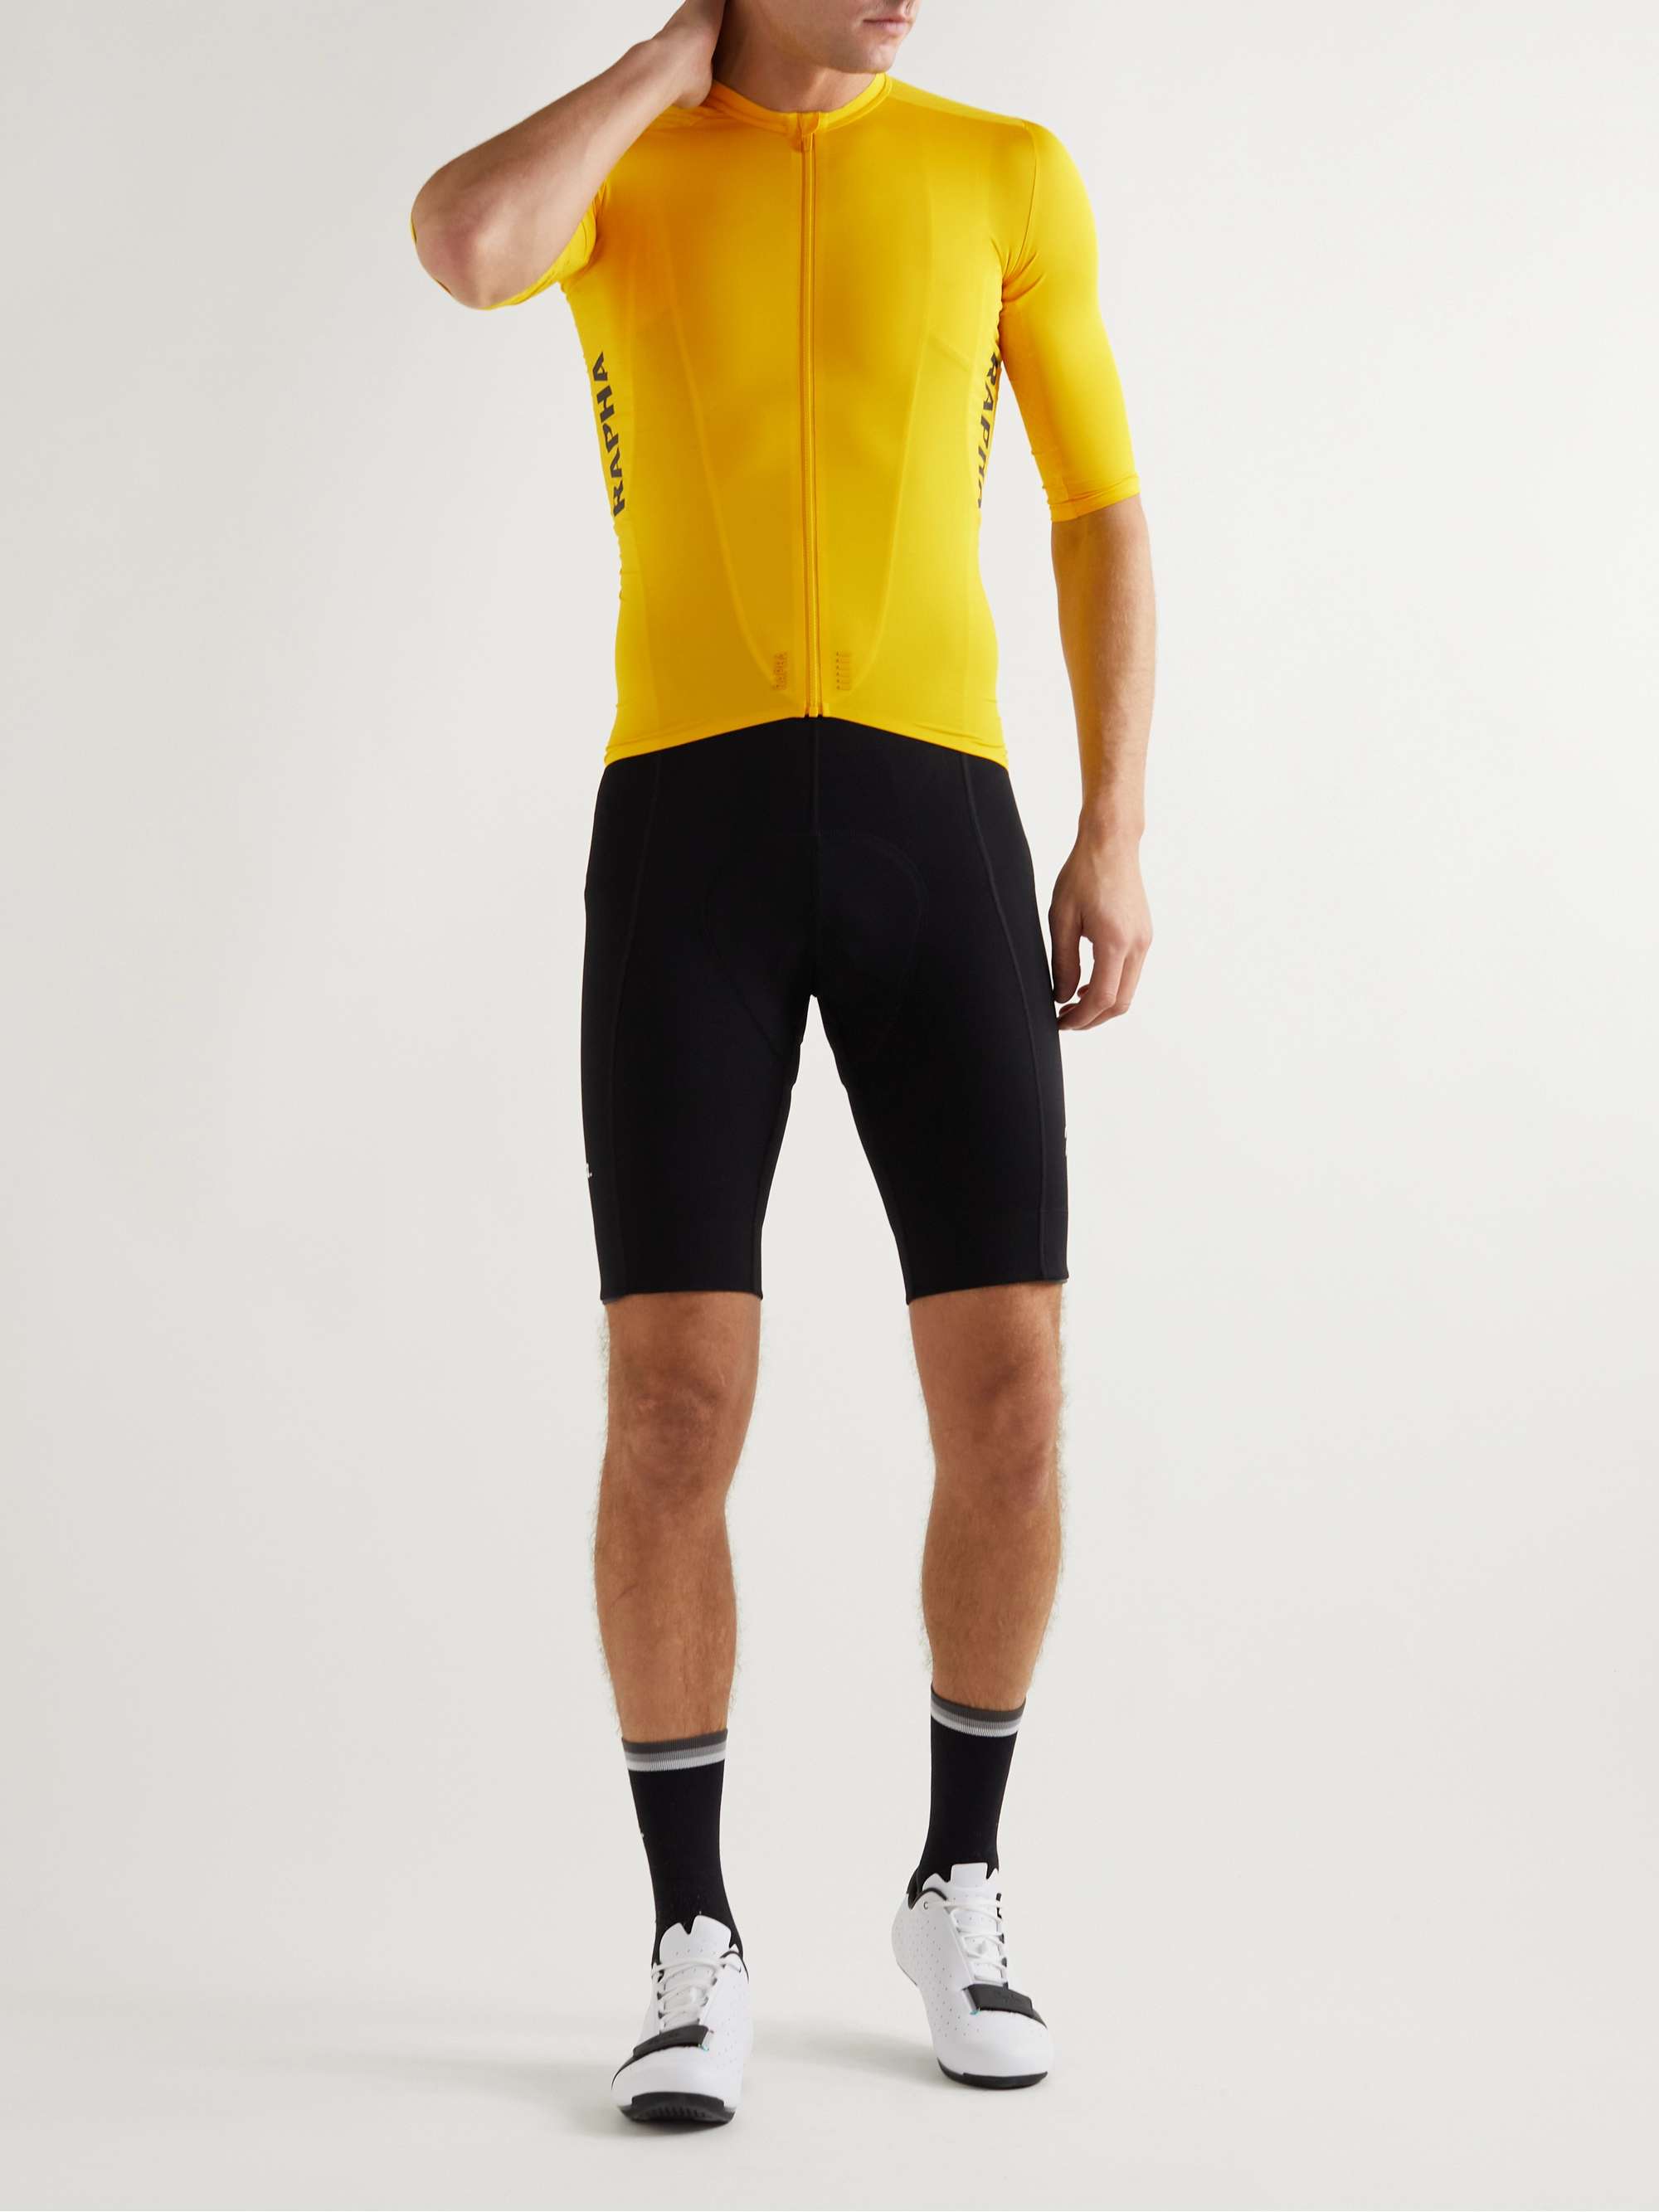 Yellow Pro Team Aero Cycling Jersey | RAPHA | MR PORTER